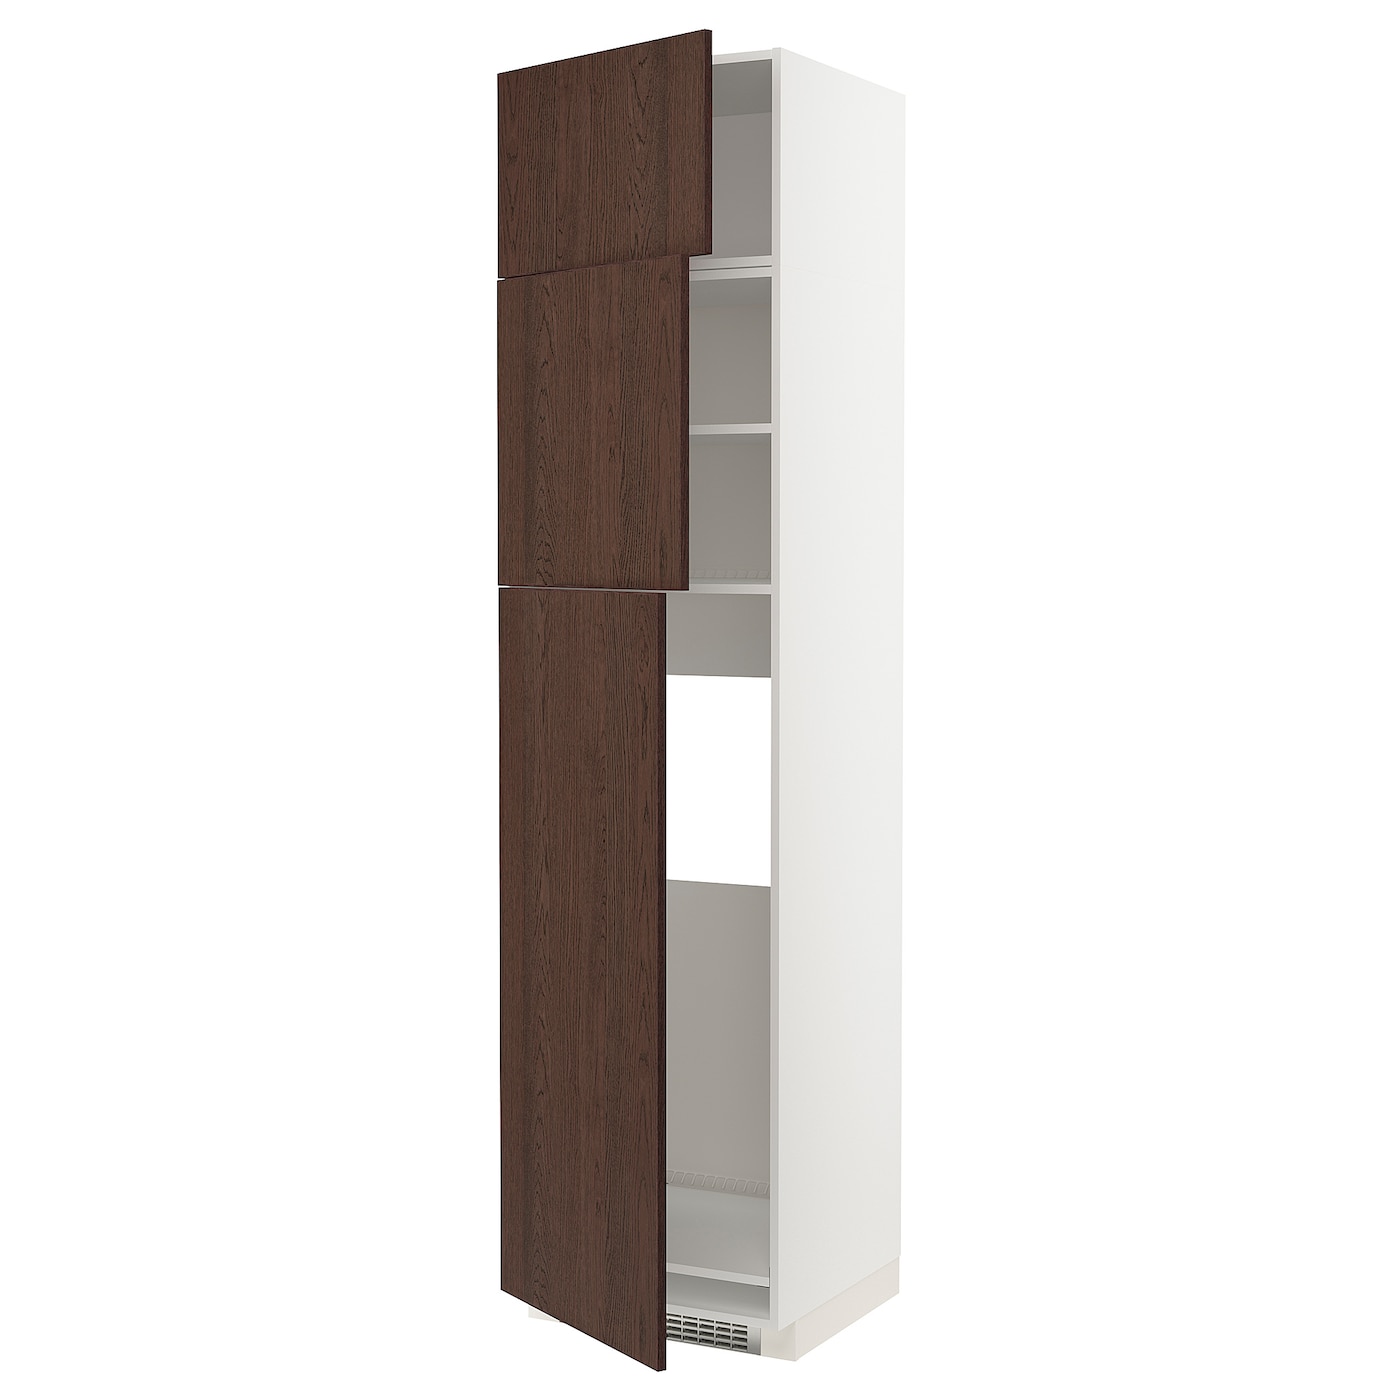 Высокий шкаф  - IKEA METOD/МЕТОД ИКЕА, 240х60х60 см, белый/коричневый